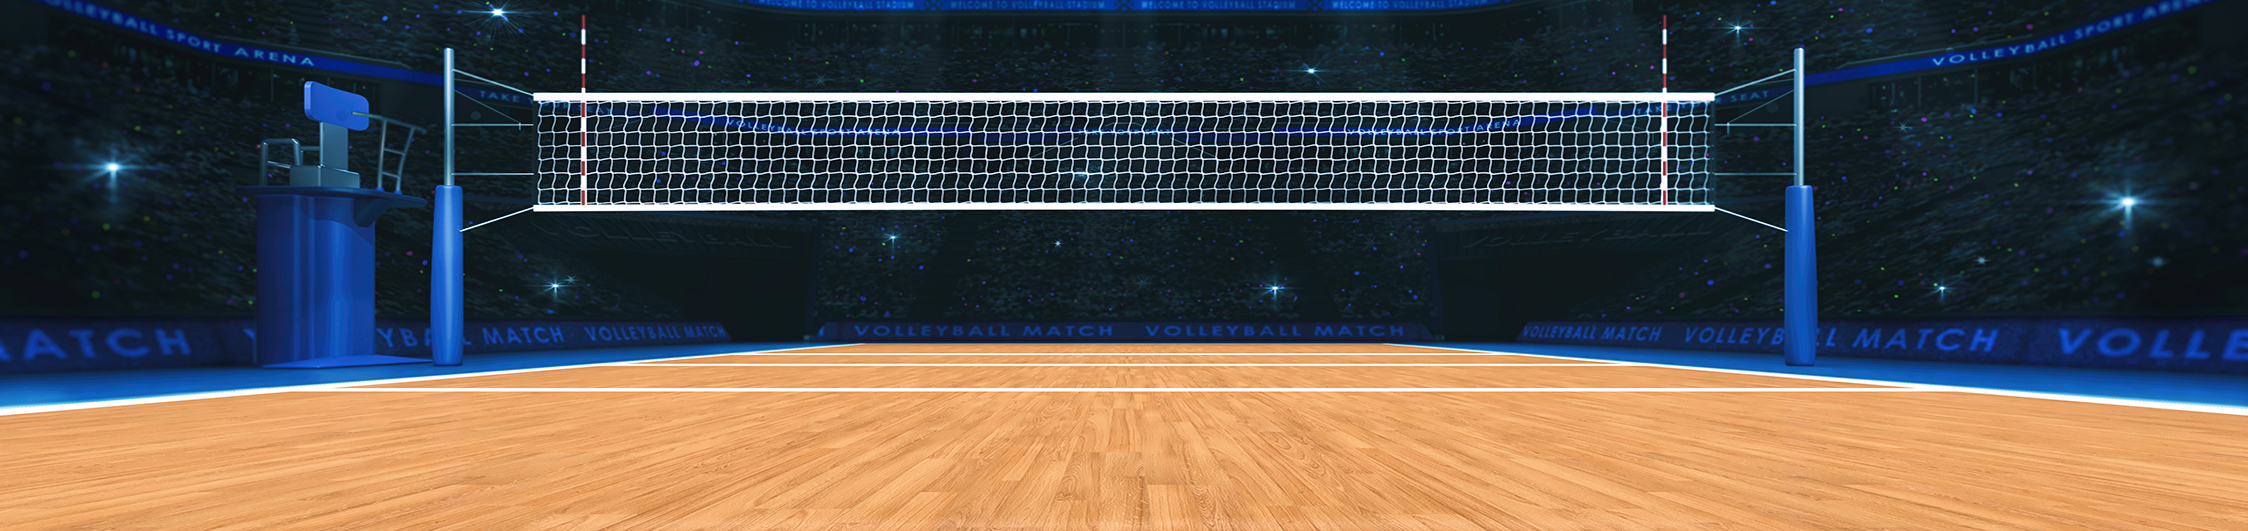 Volleyball Flooring, Outdoor Portable Volleyball Court Flooring ...